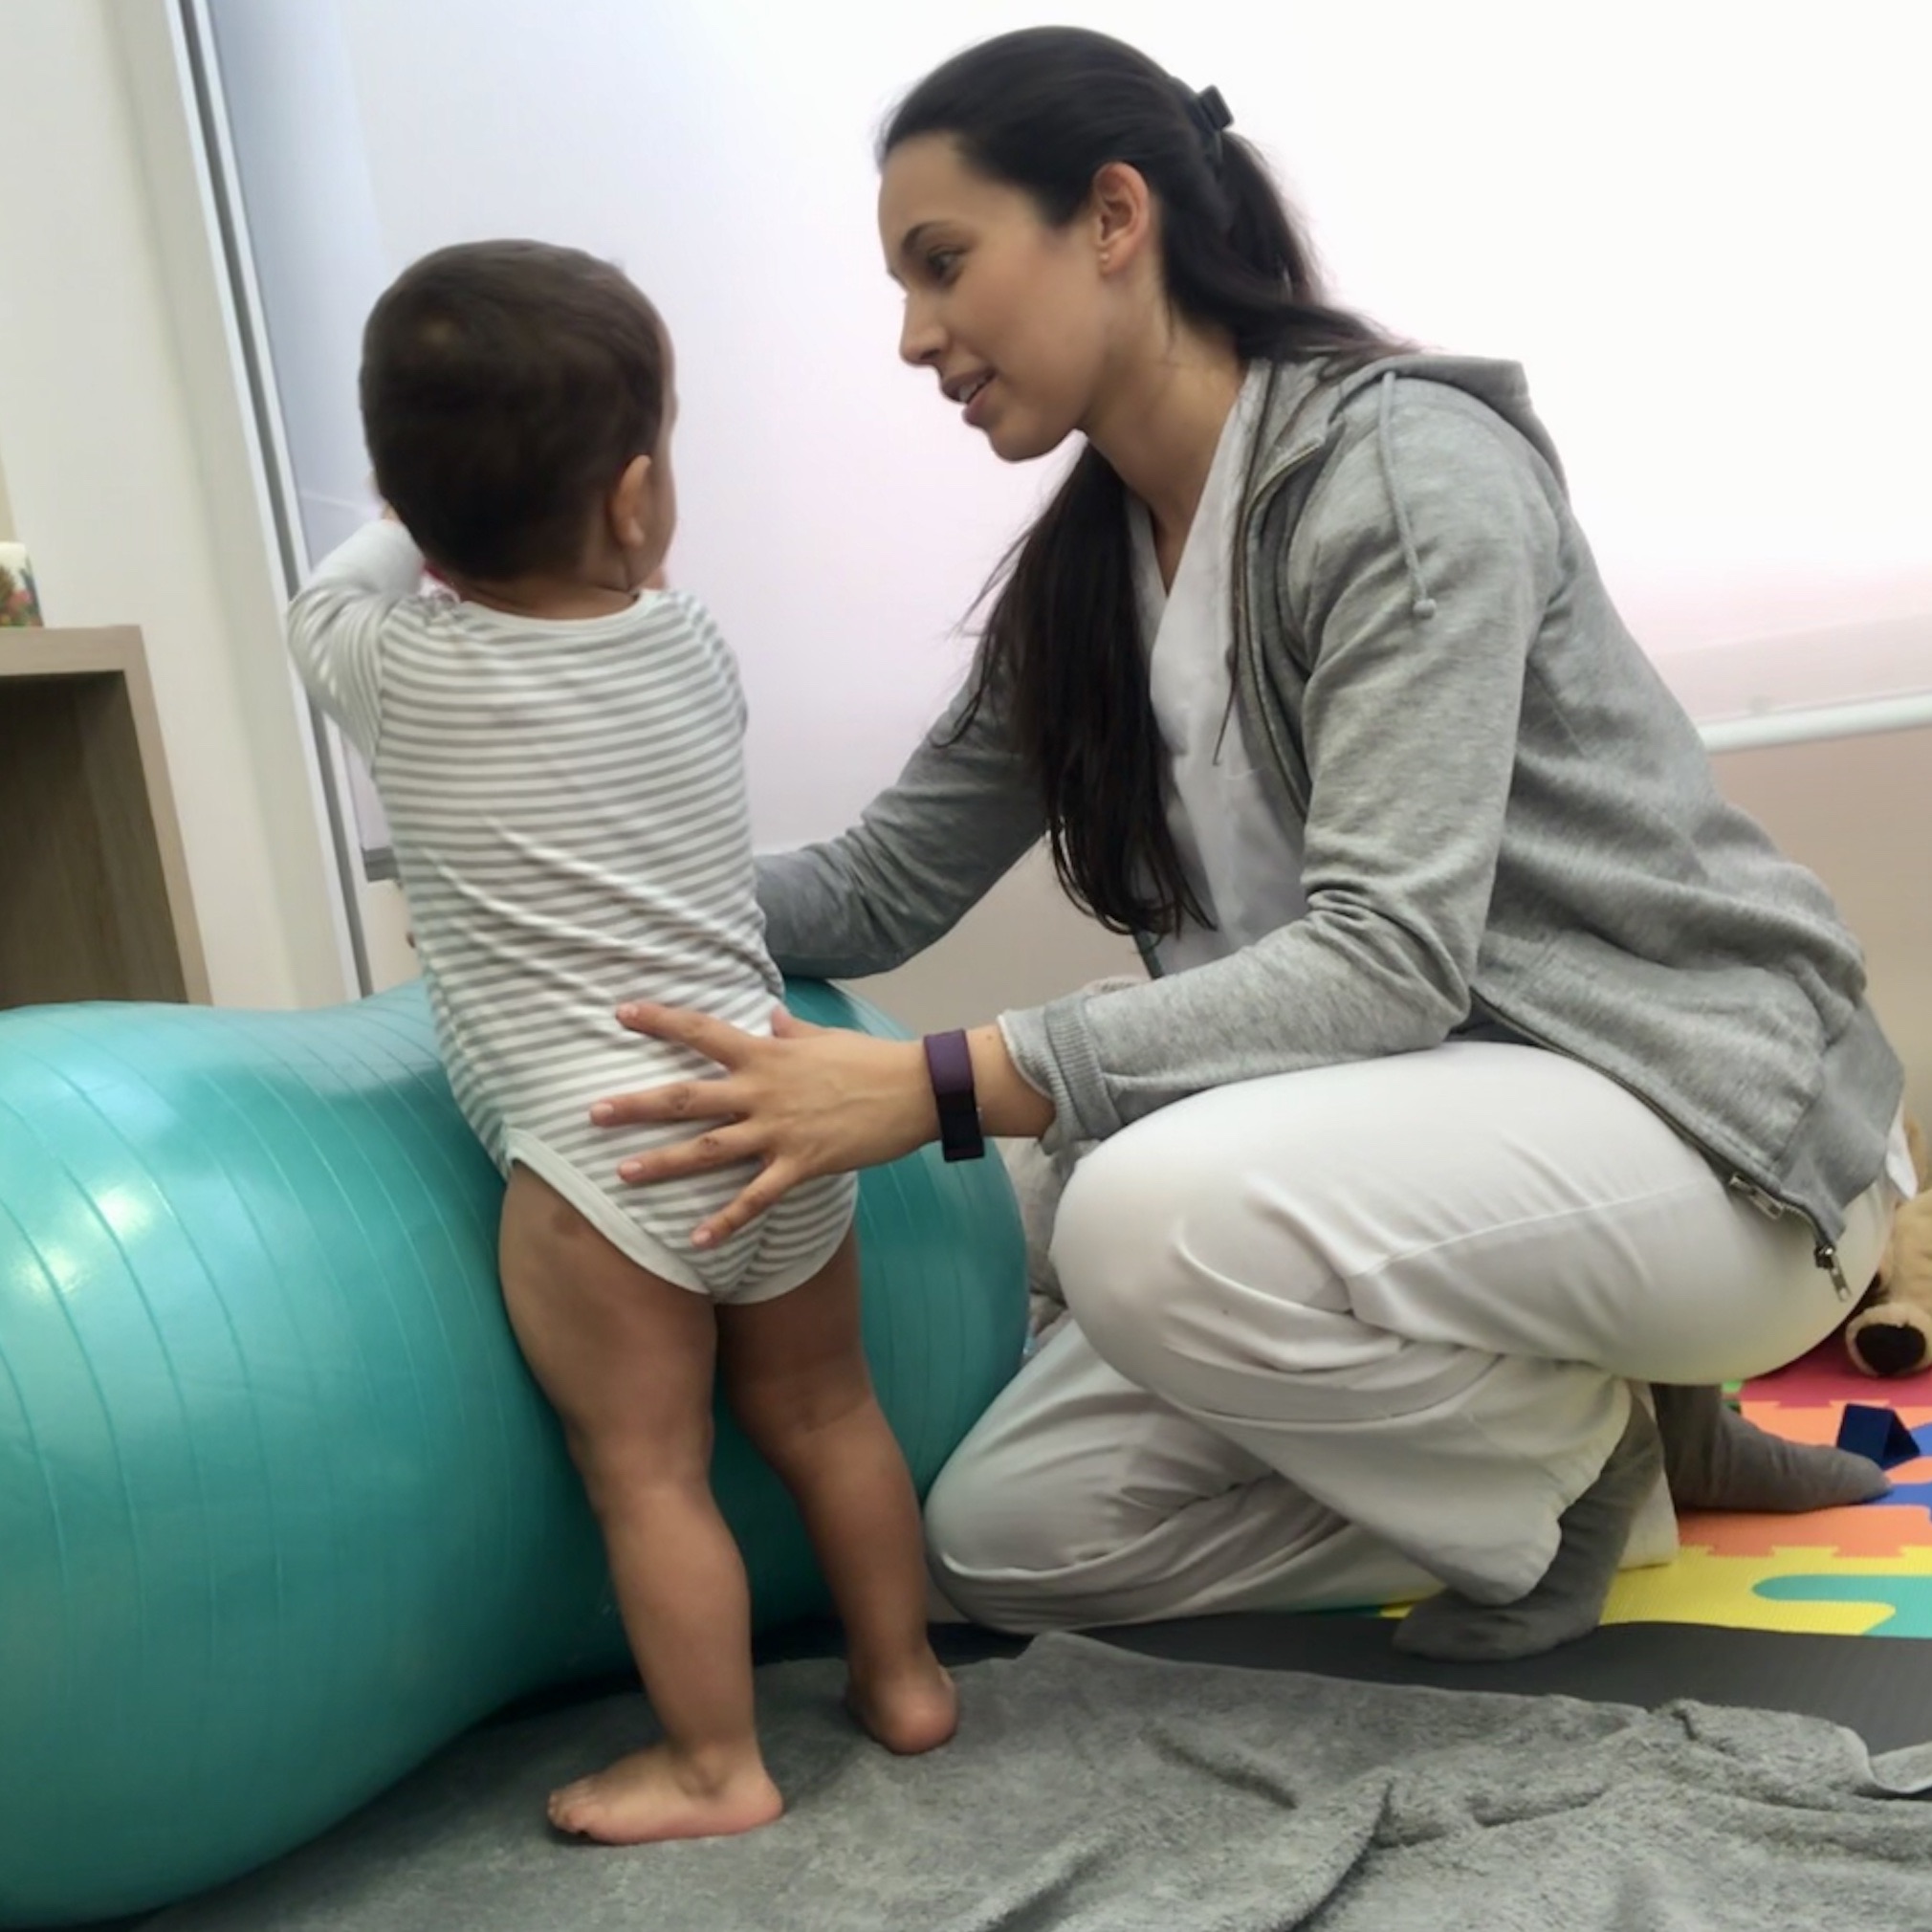 fisioterapia pediatrica en clinica de fisioterapia duque